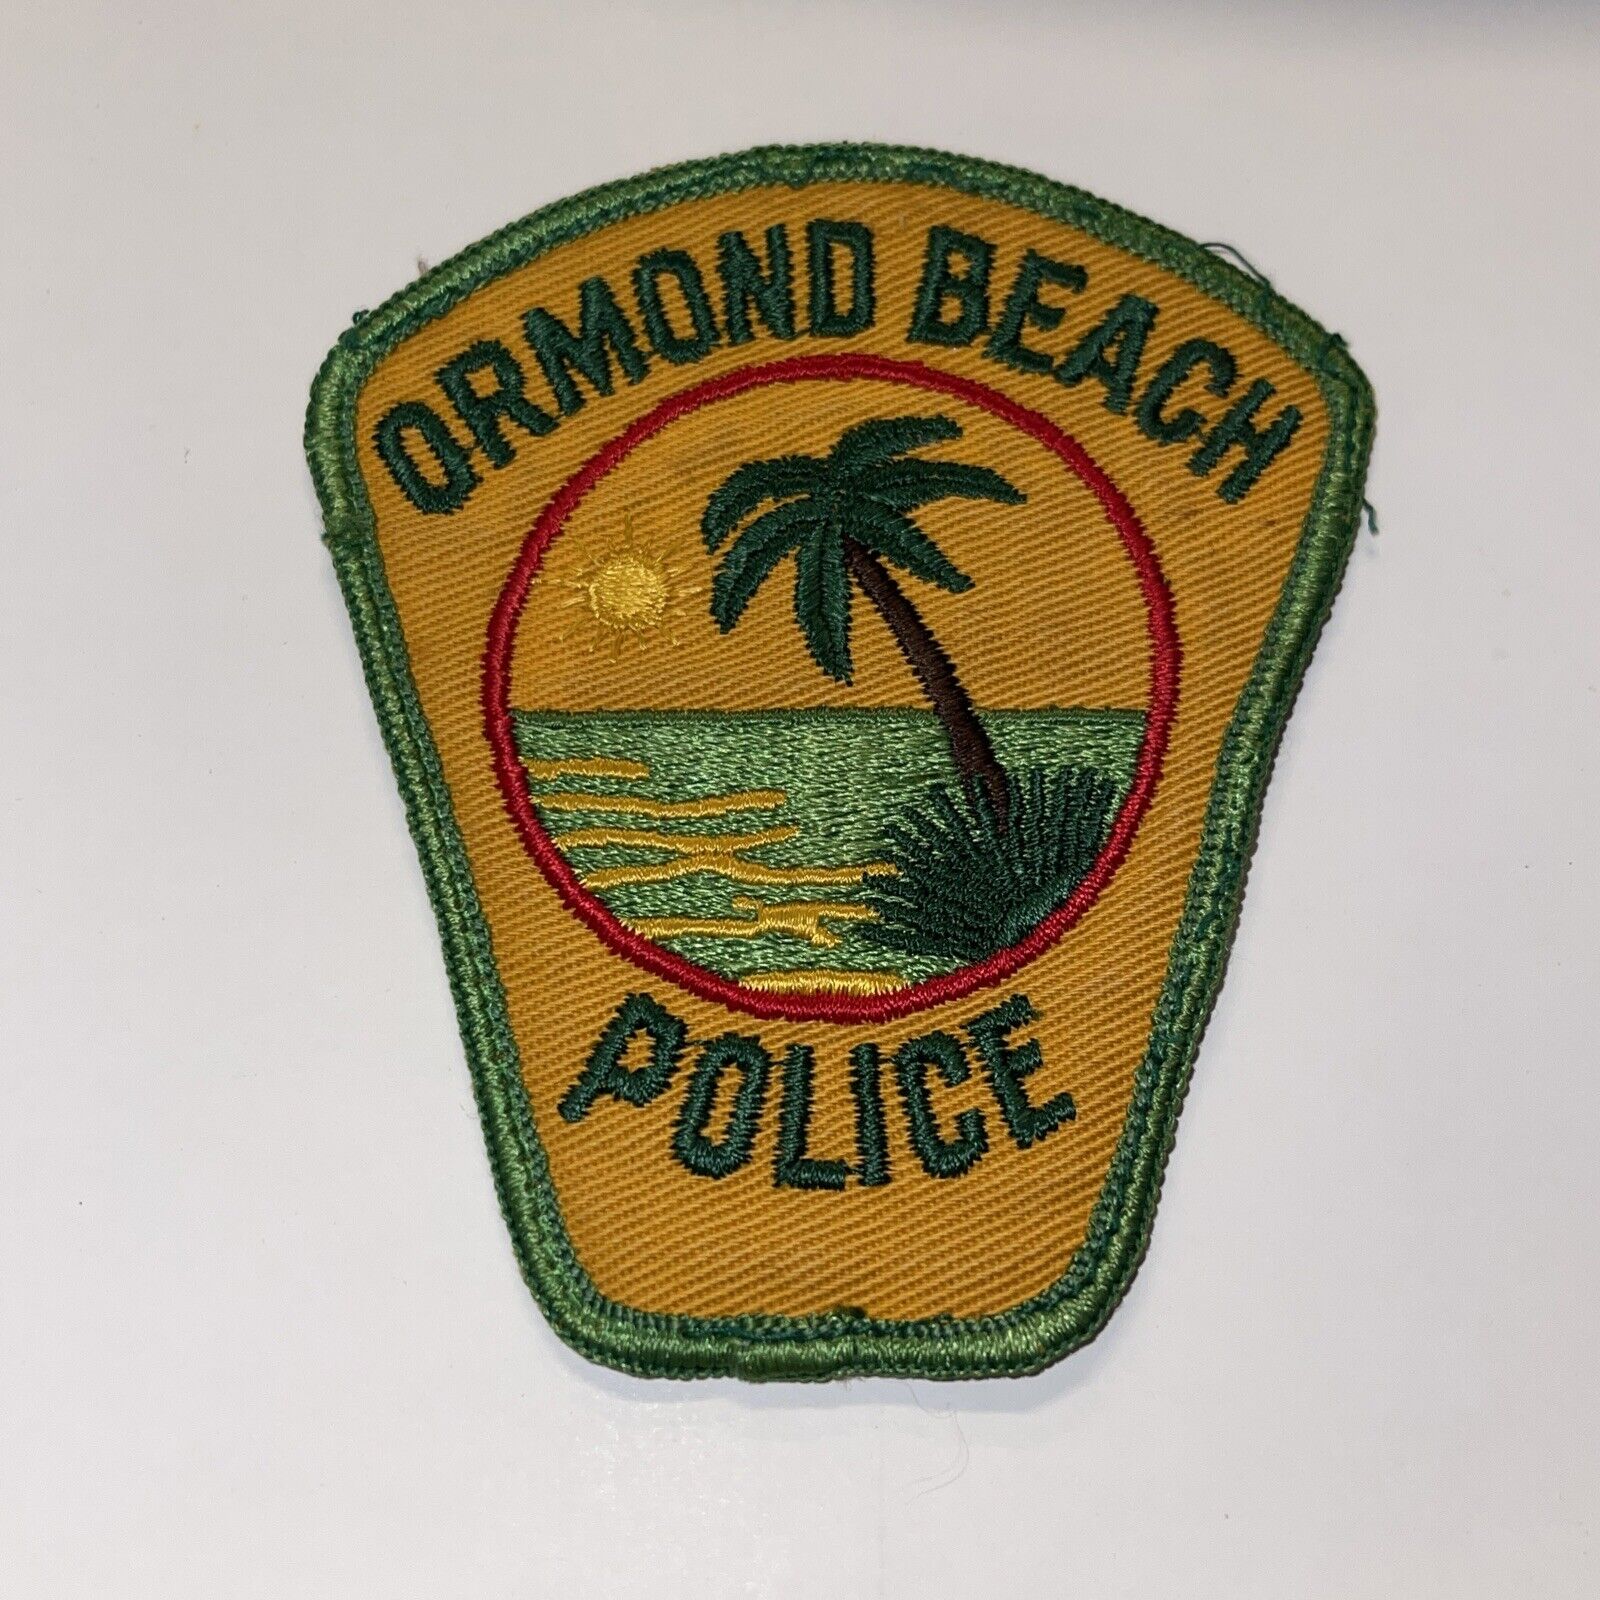 VINTAGE ORMOND BEACH FL POLICE PATCH OBSOLETE RARE SHOULDER